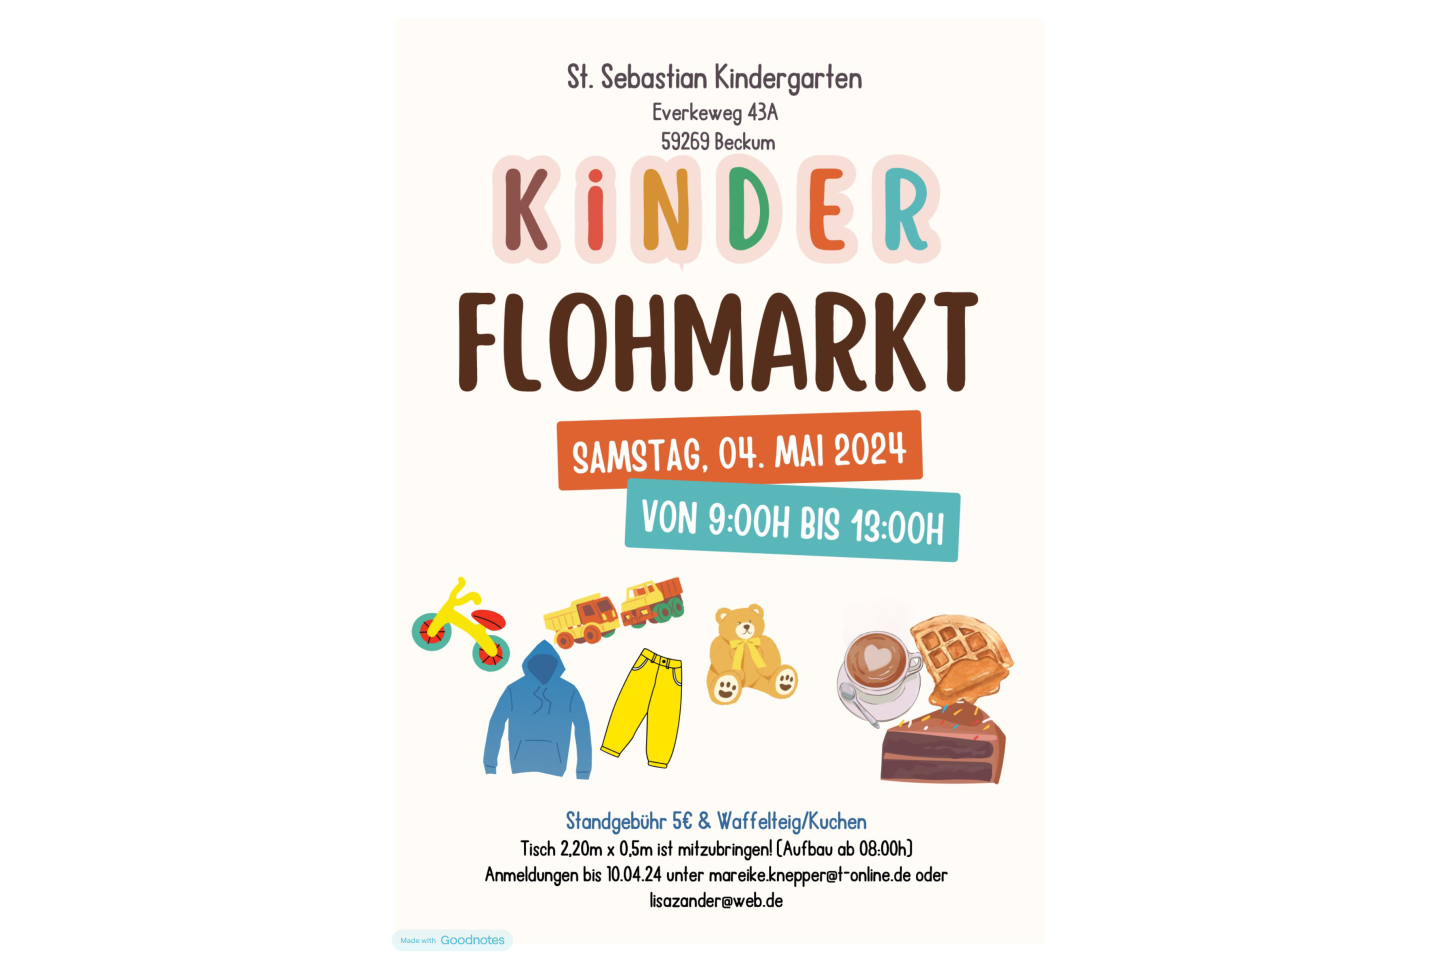 Kinderflohmarkt im St. Sebastian Kindergarten